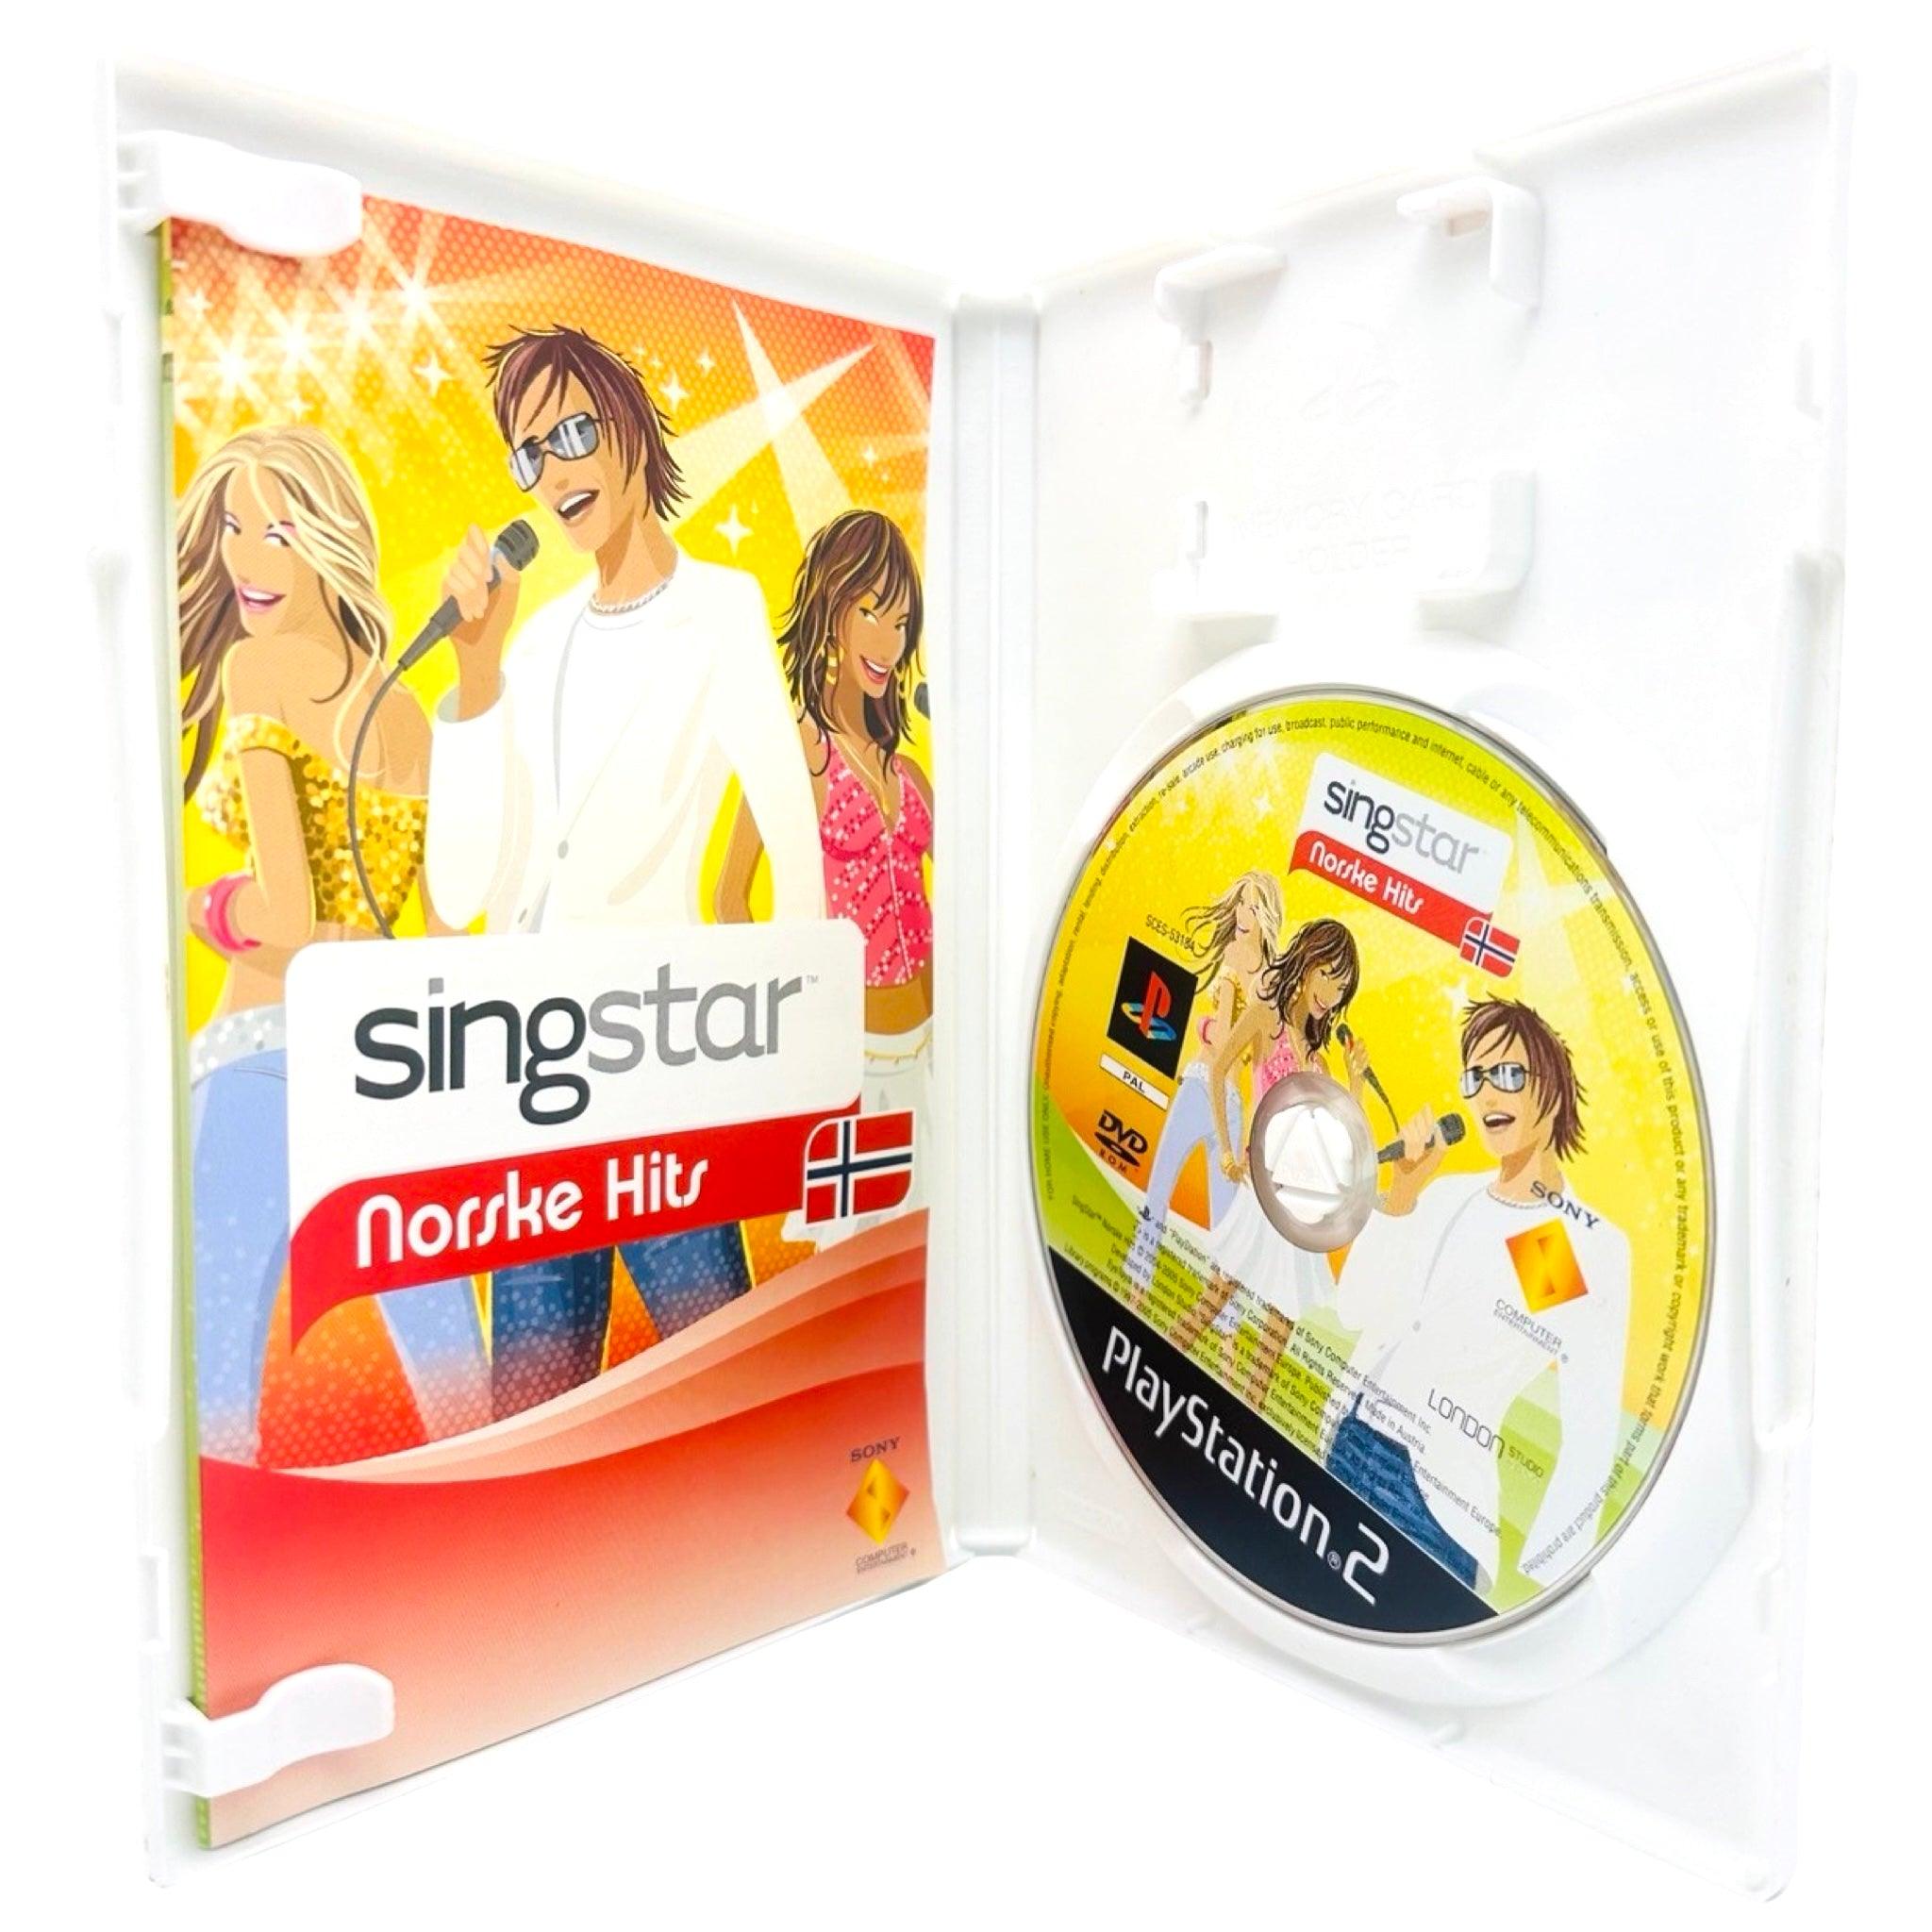 PS2: SingStar: Norske Hits - RetroGaming.no